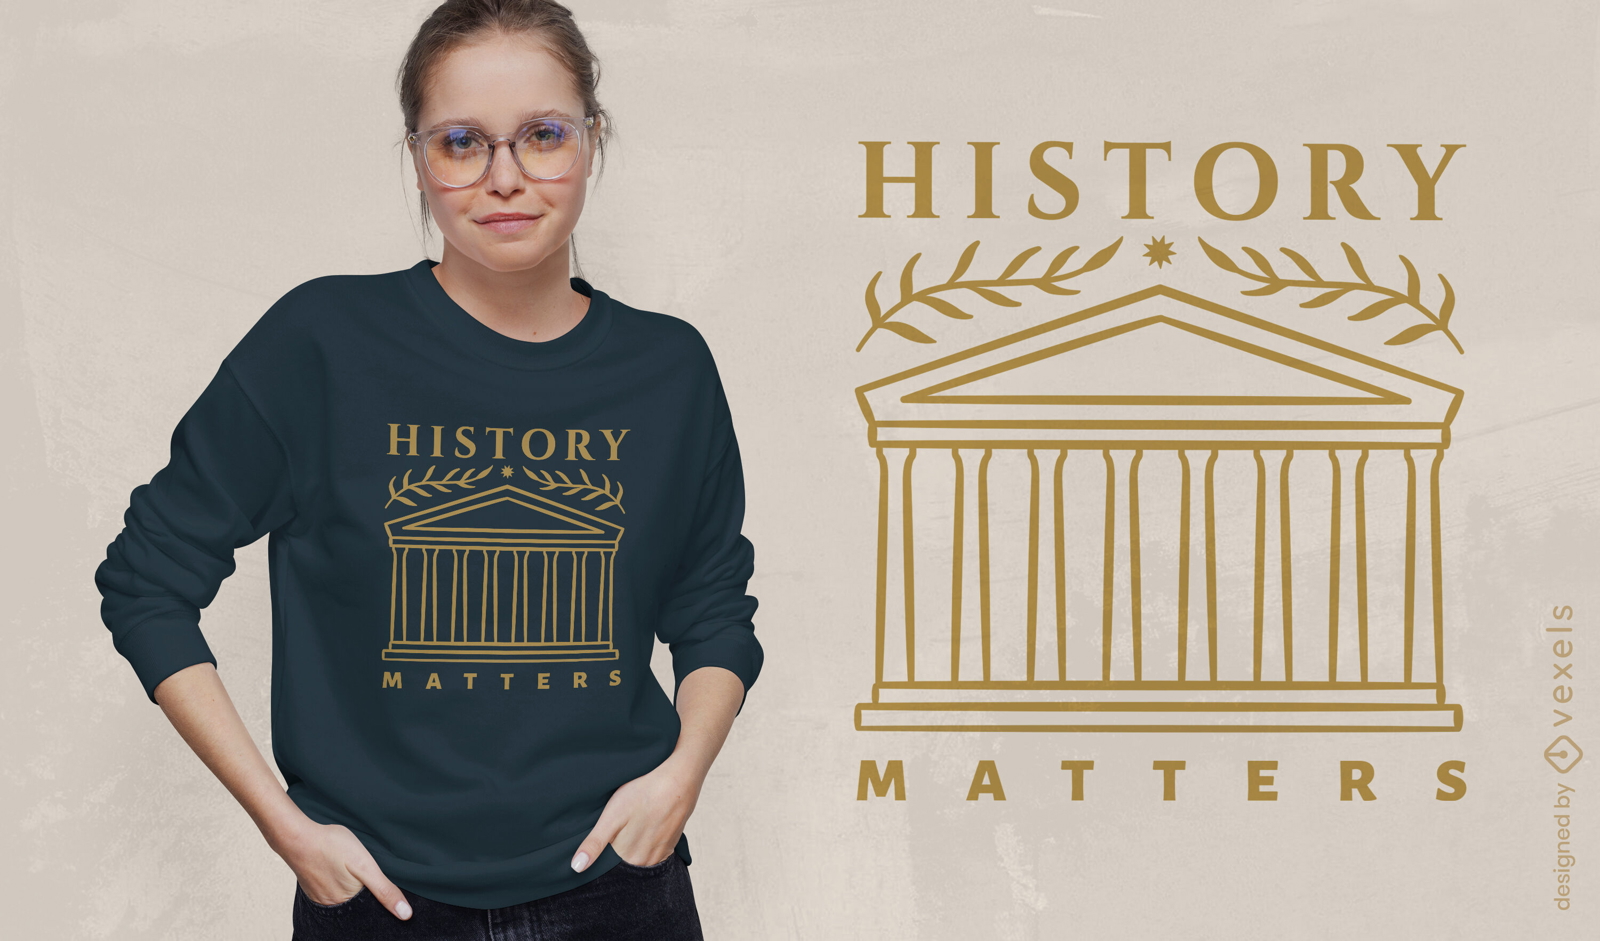 History matters t-shirt design